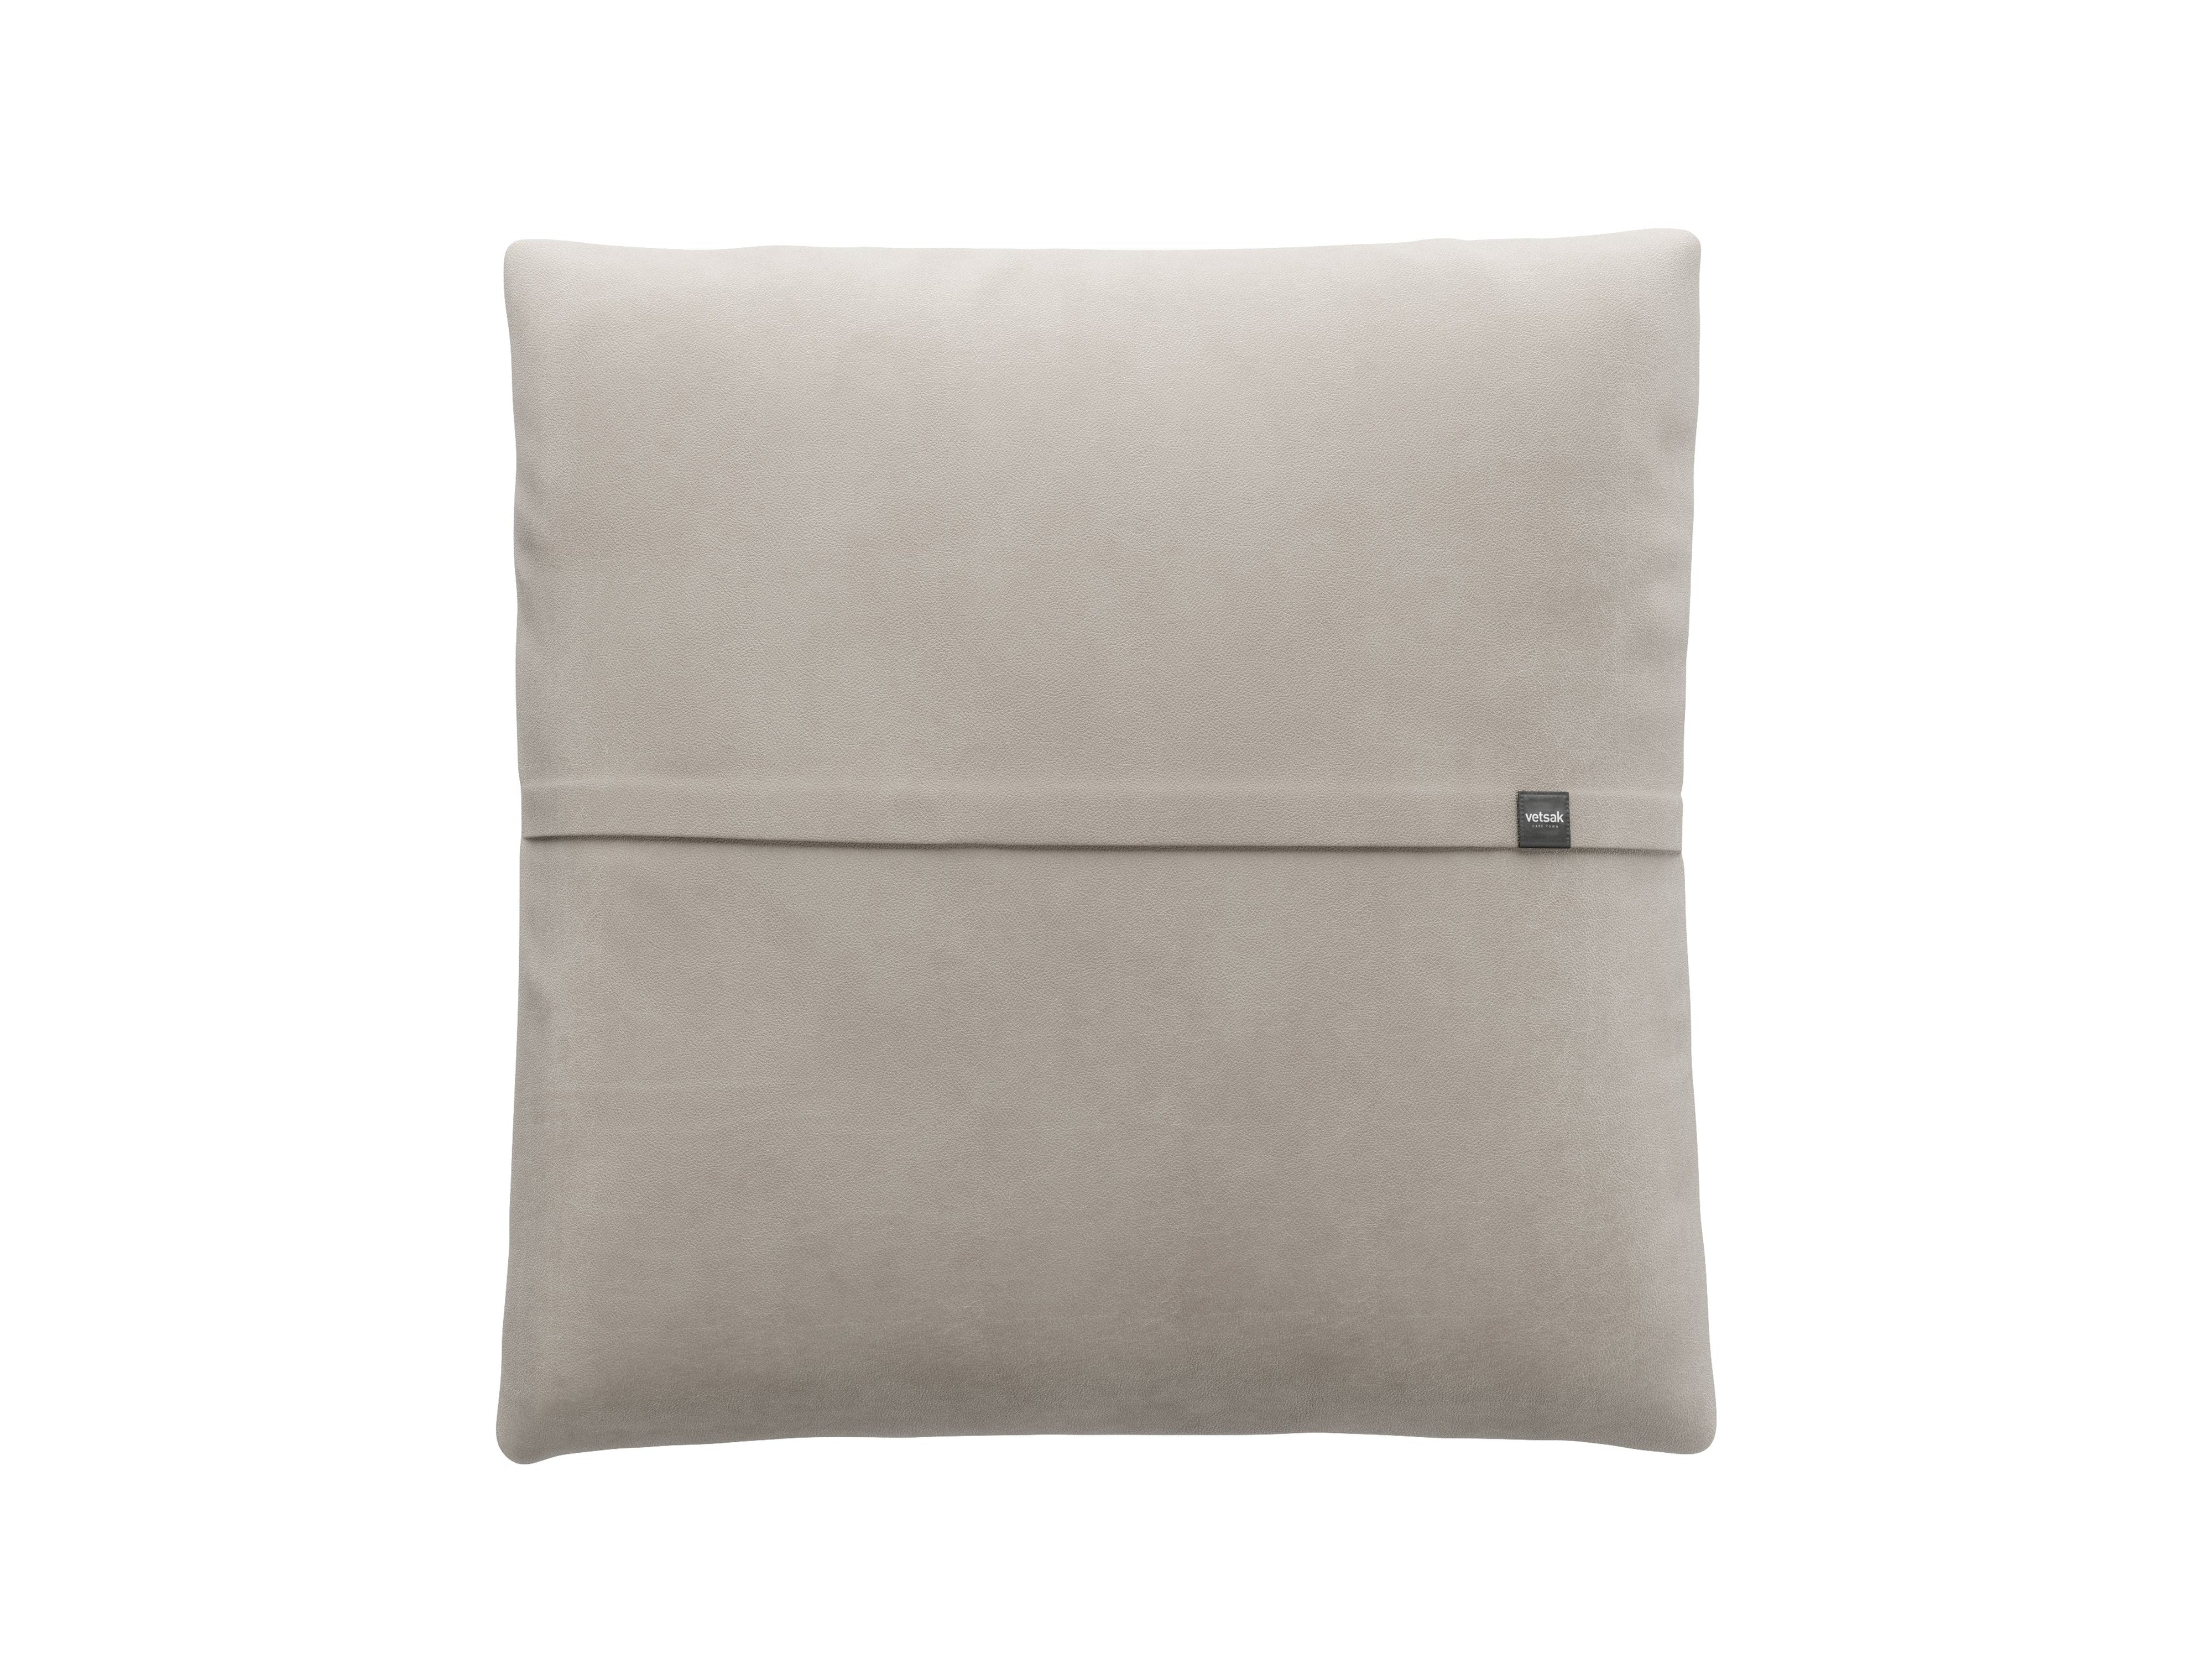 jumbo pillow - leather - light grey